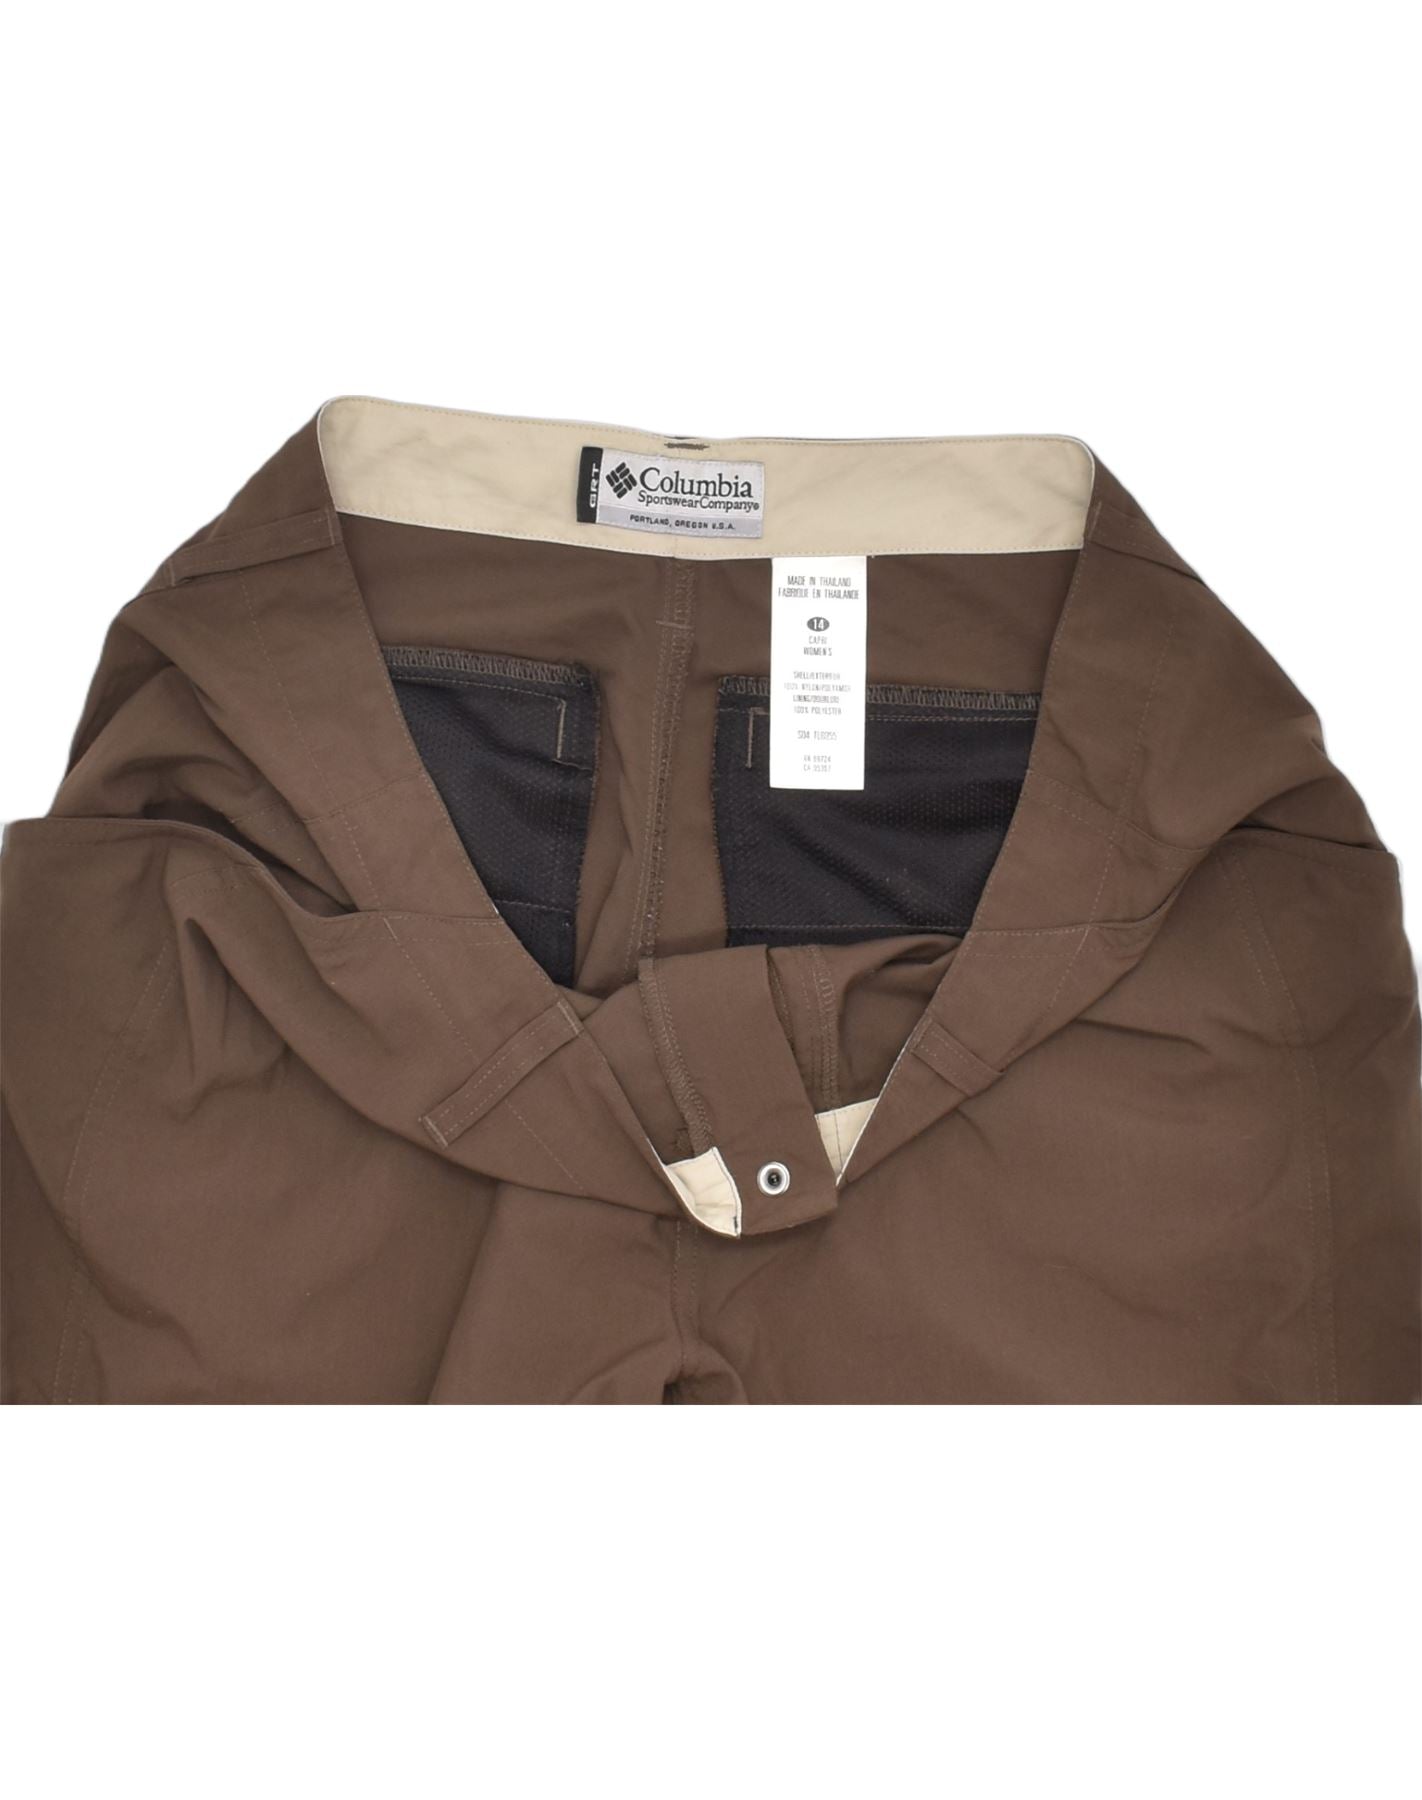 COLUMBIA Womens Slim Capri Trousers US 14 XL W36 L23 Brown Nylon, Vintage  & Second-Hand Clothing Online